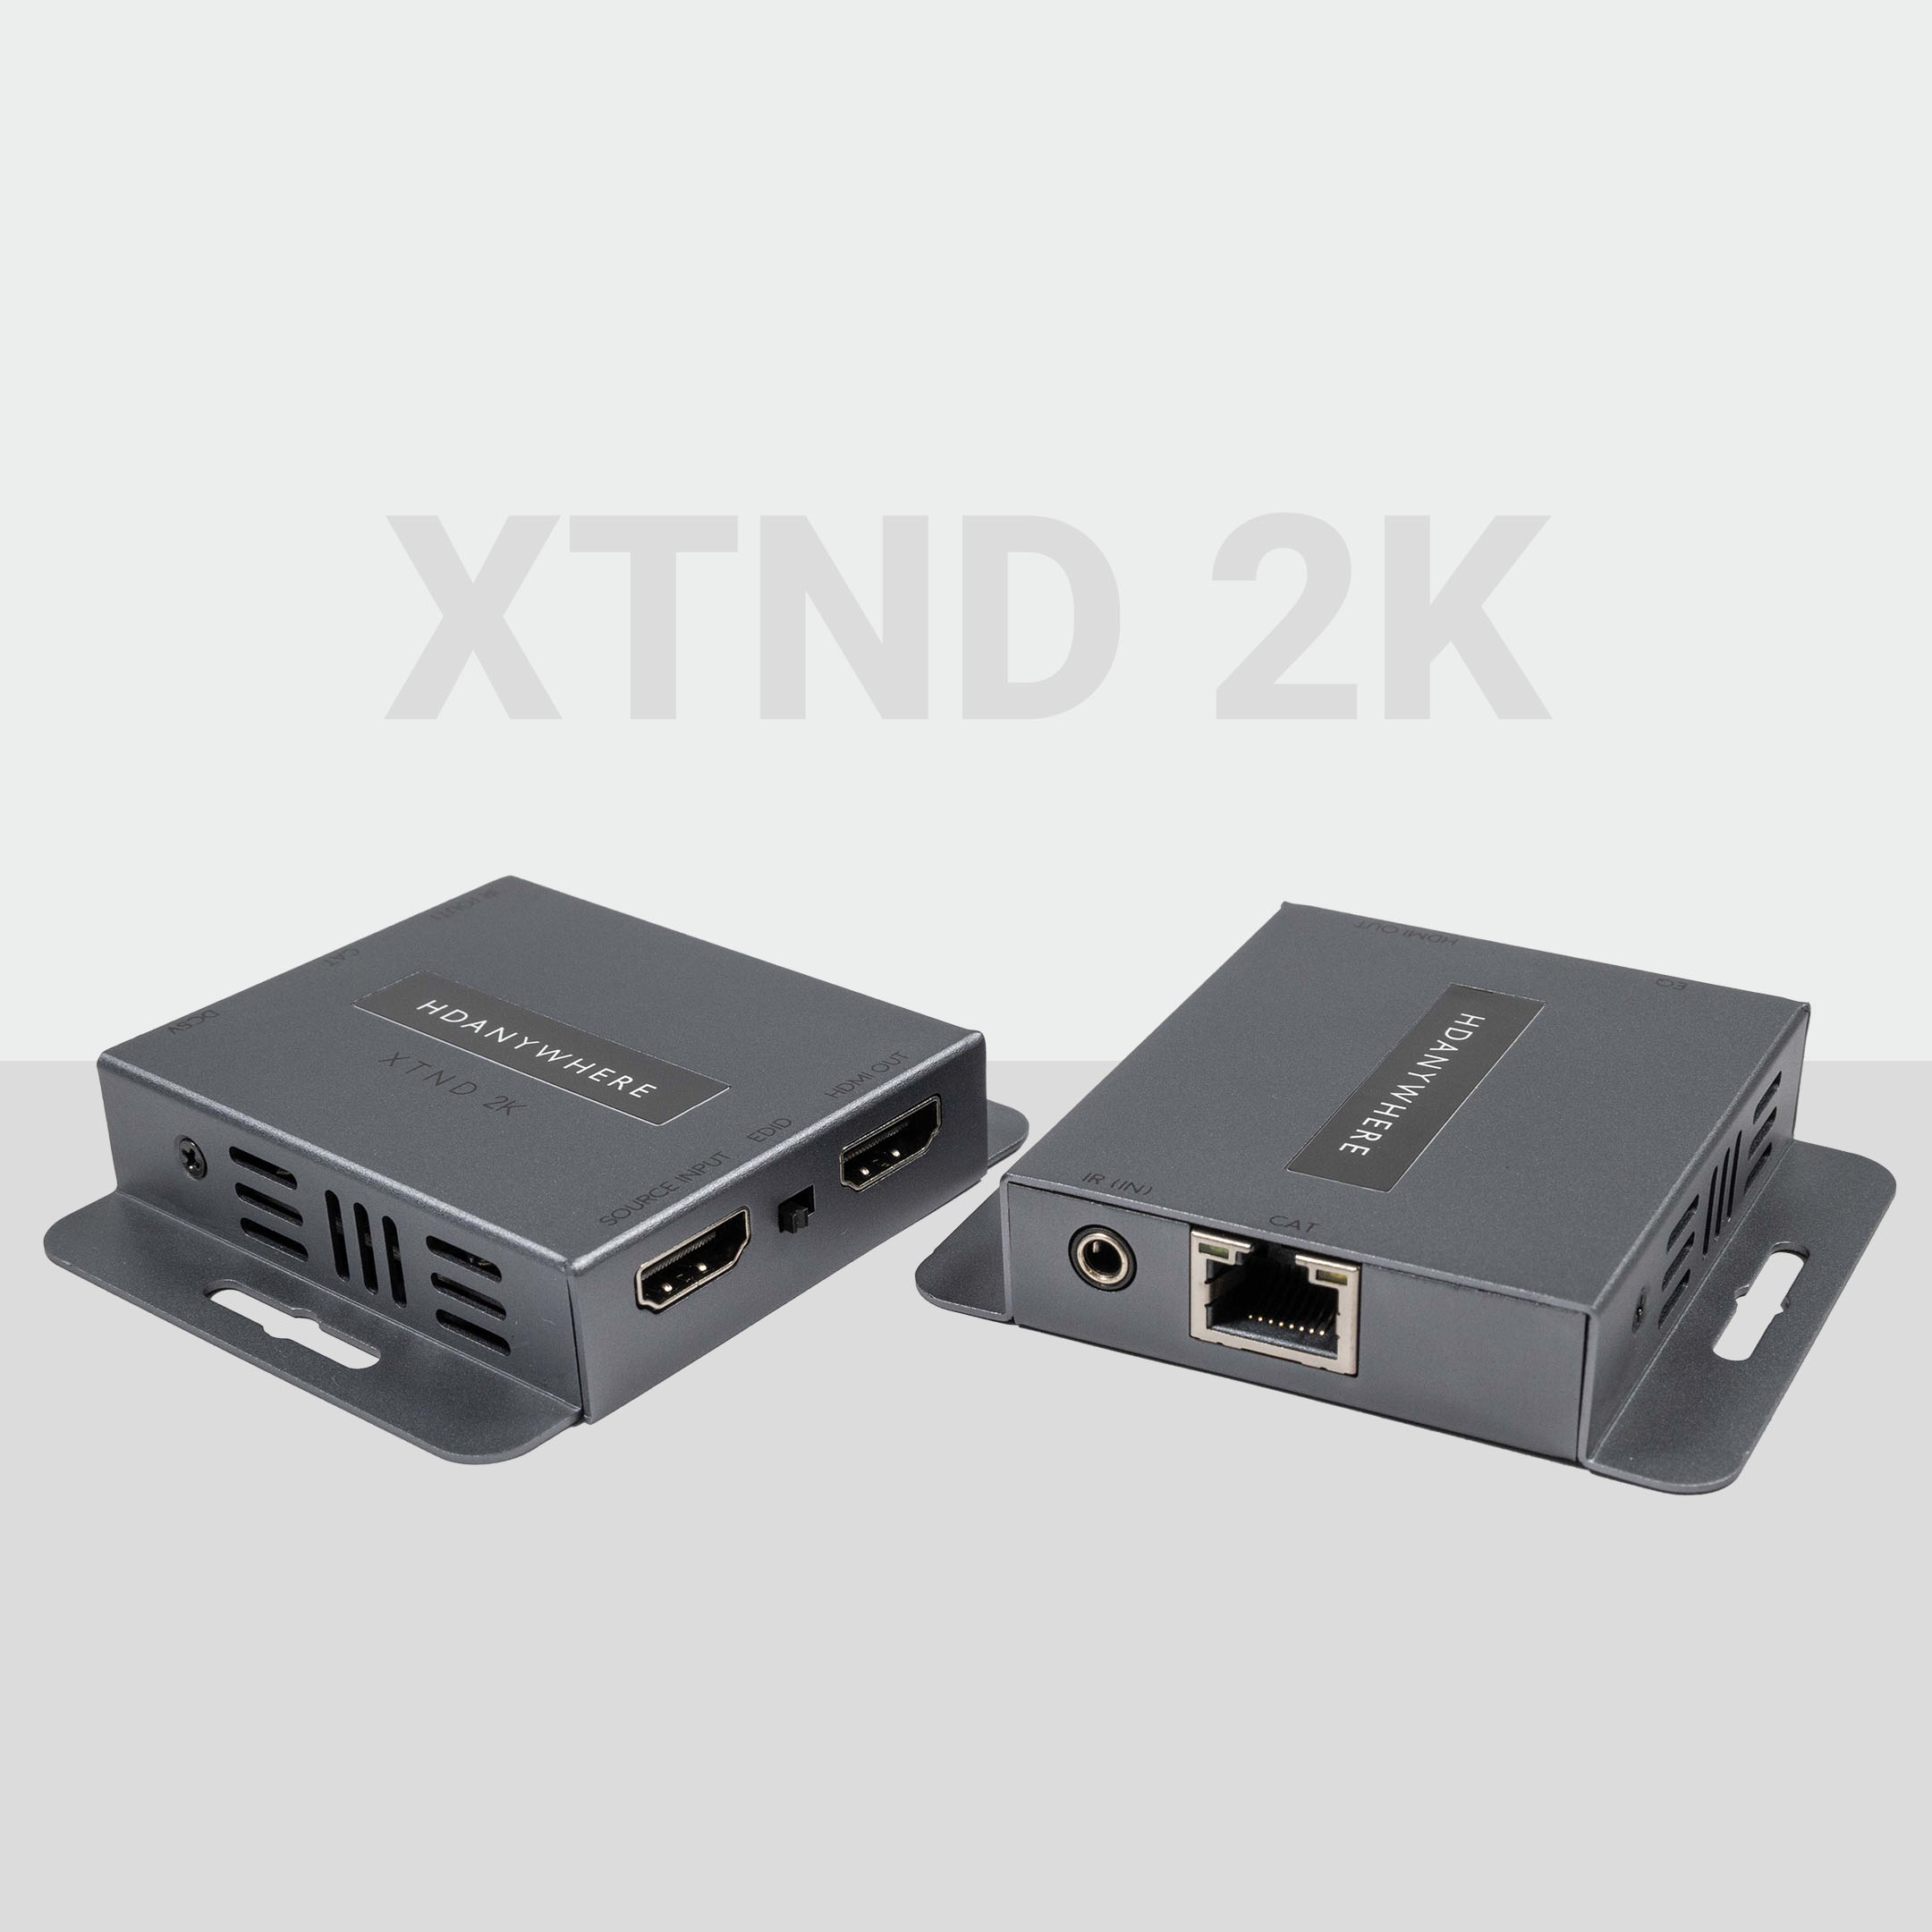 XTND 2K (30)